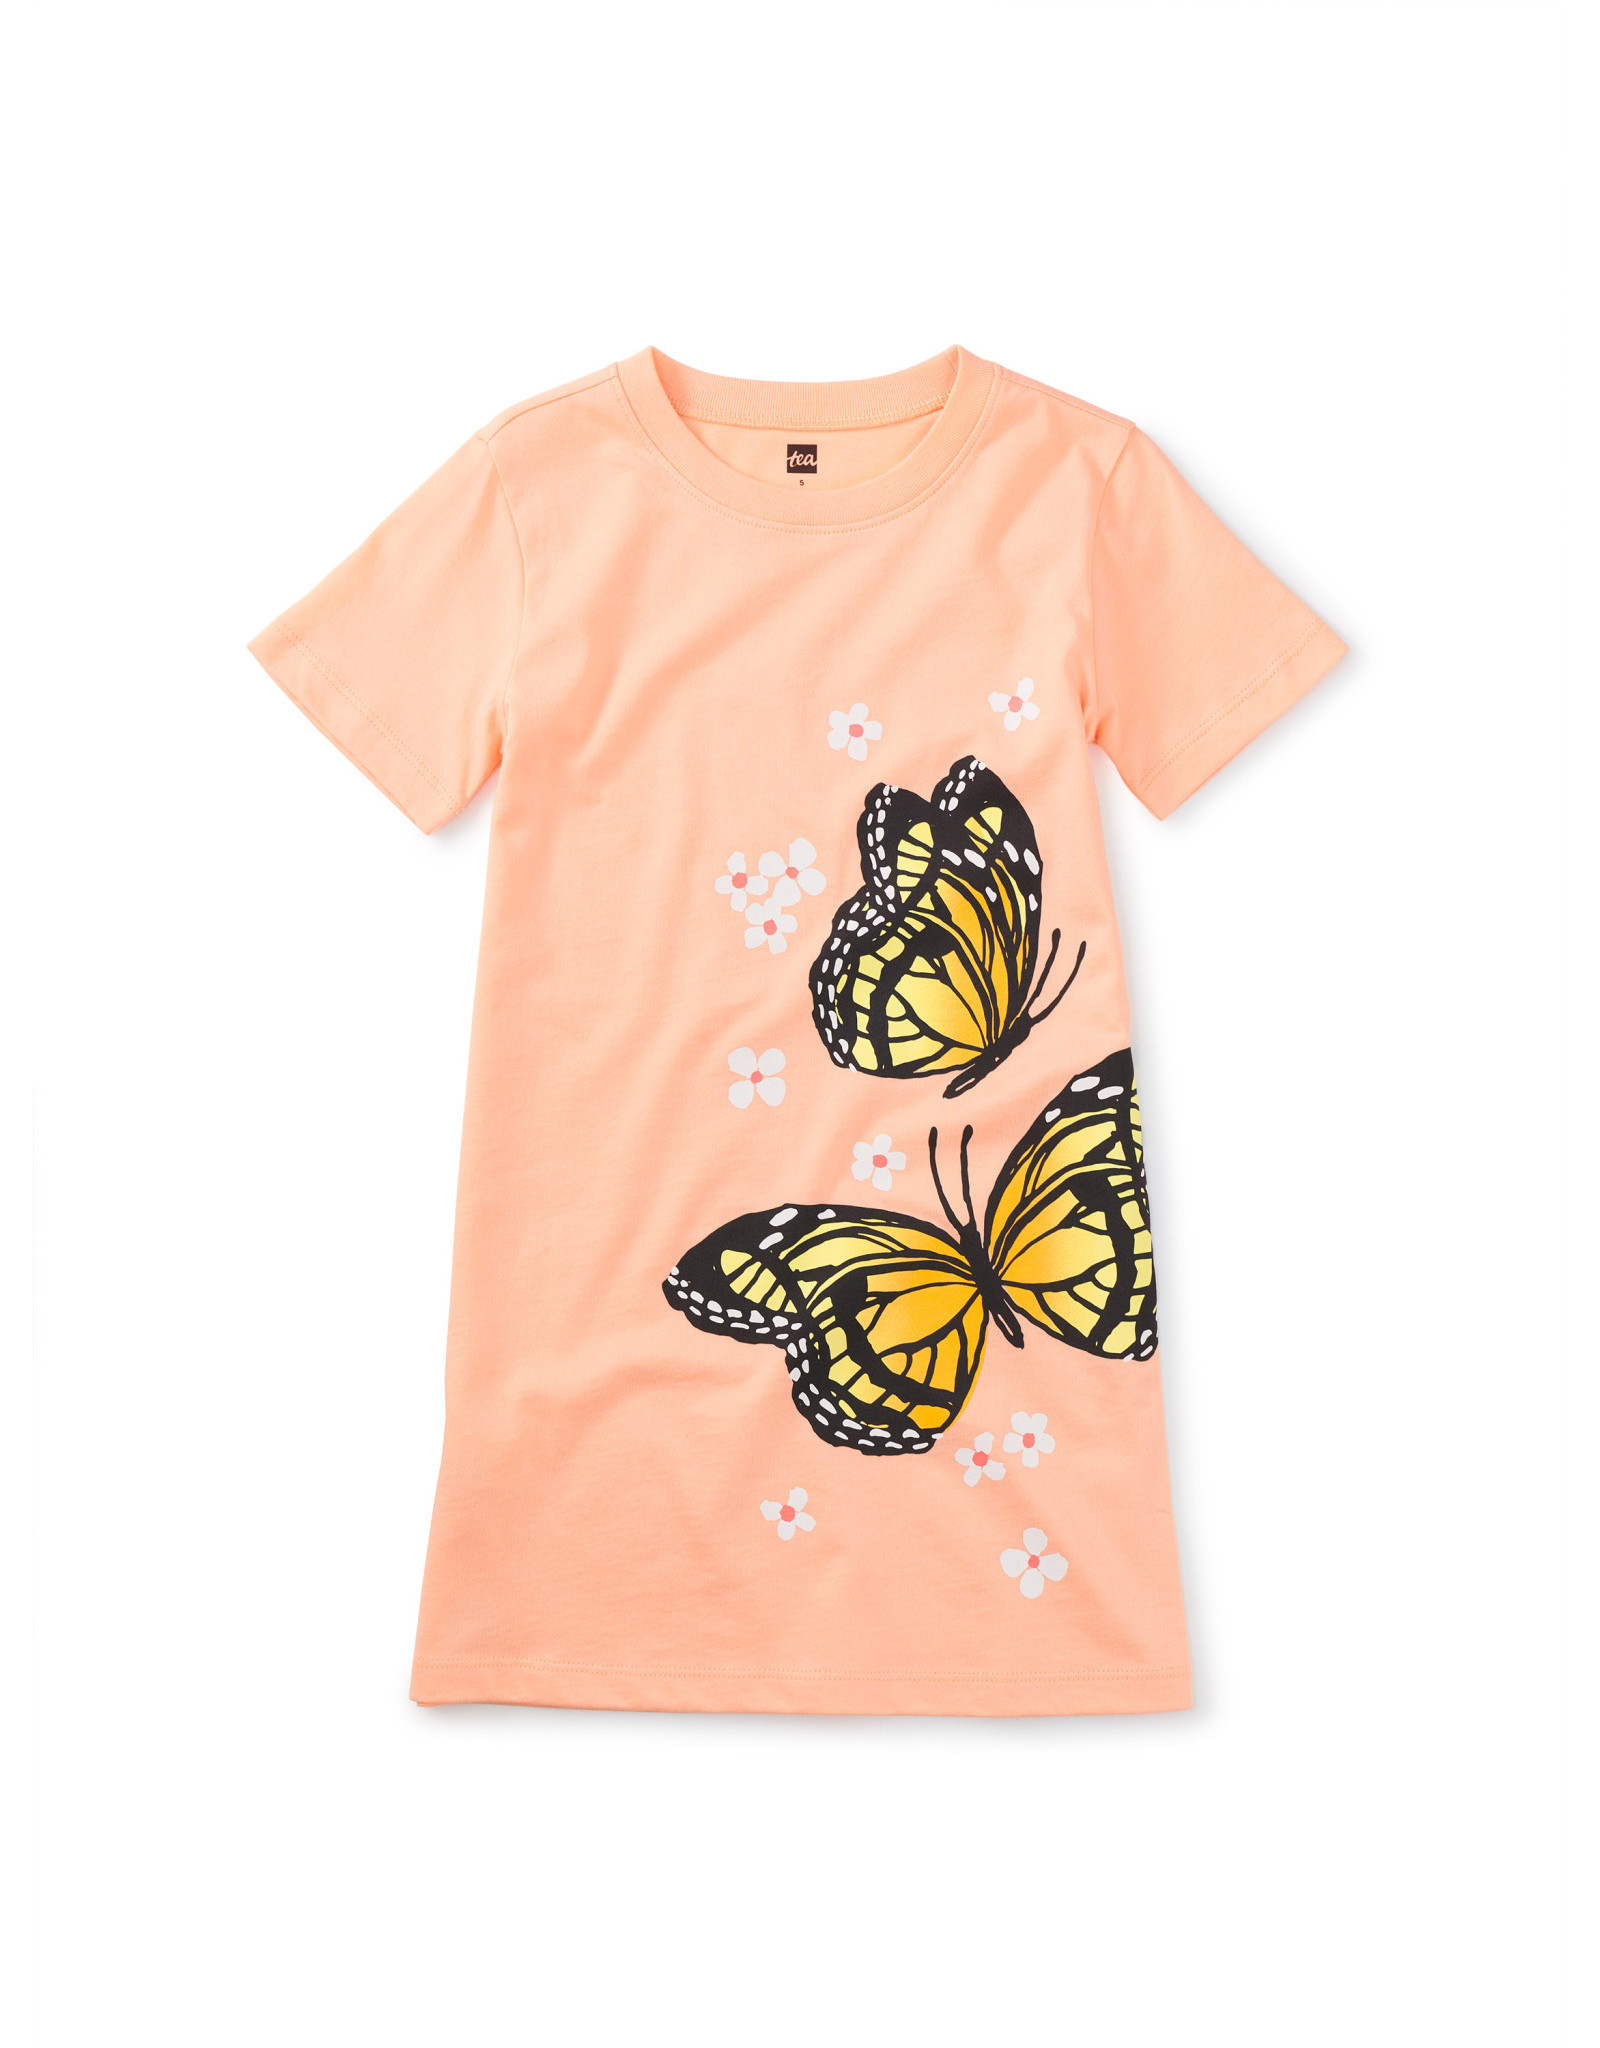 Tea Collection Monarch Butterfly T-shirt Dress-Salmon